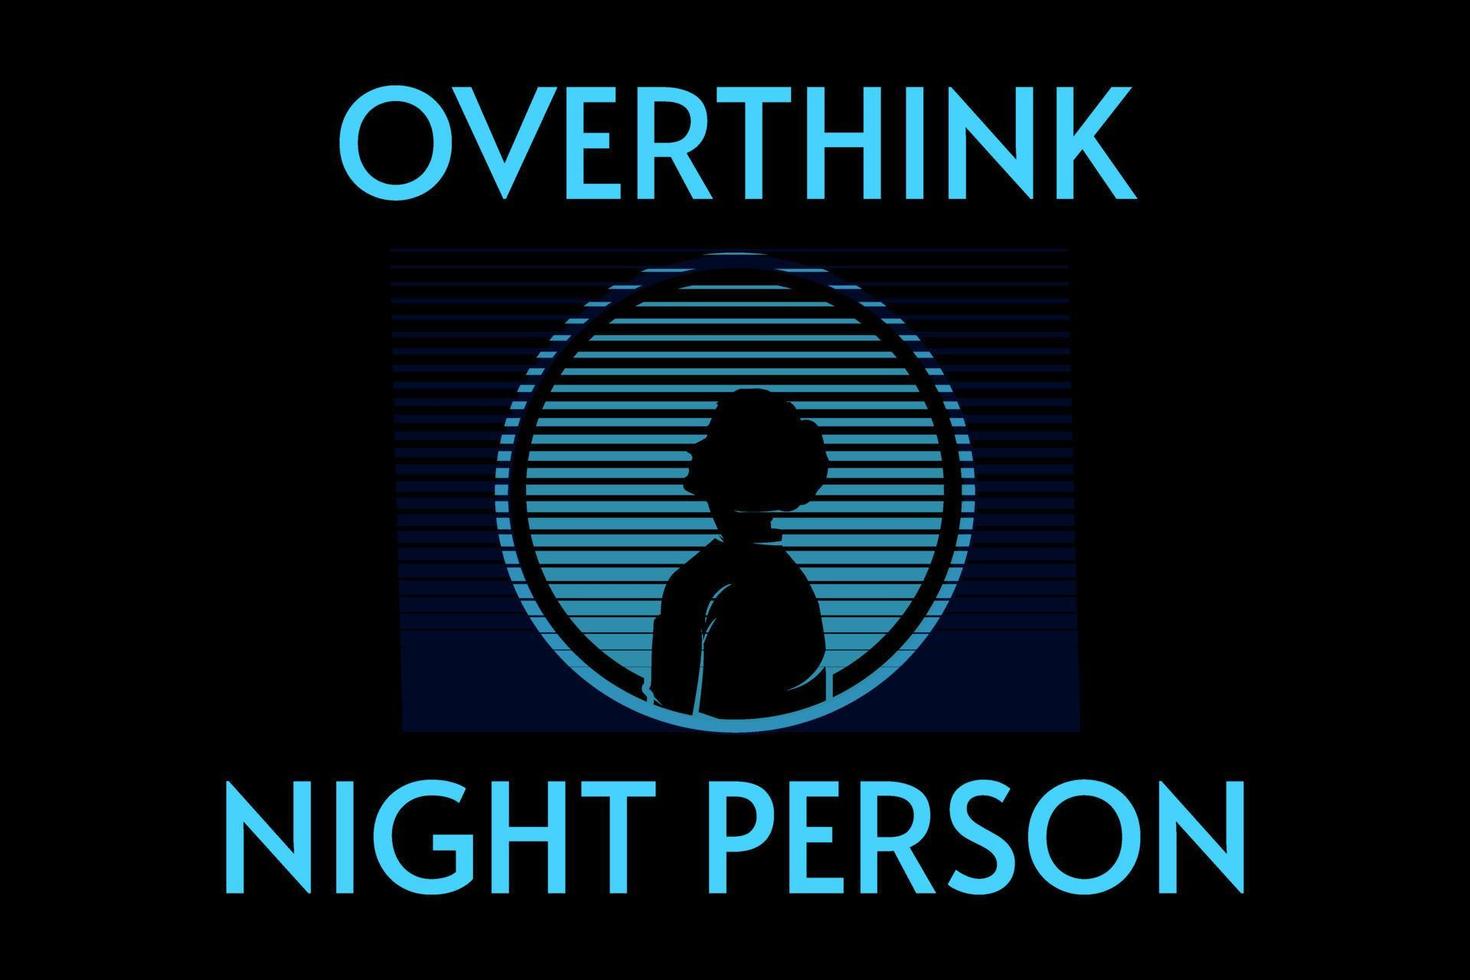 natt person siluett retro design vektor